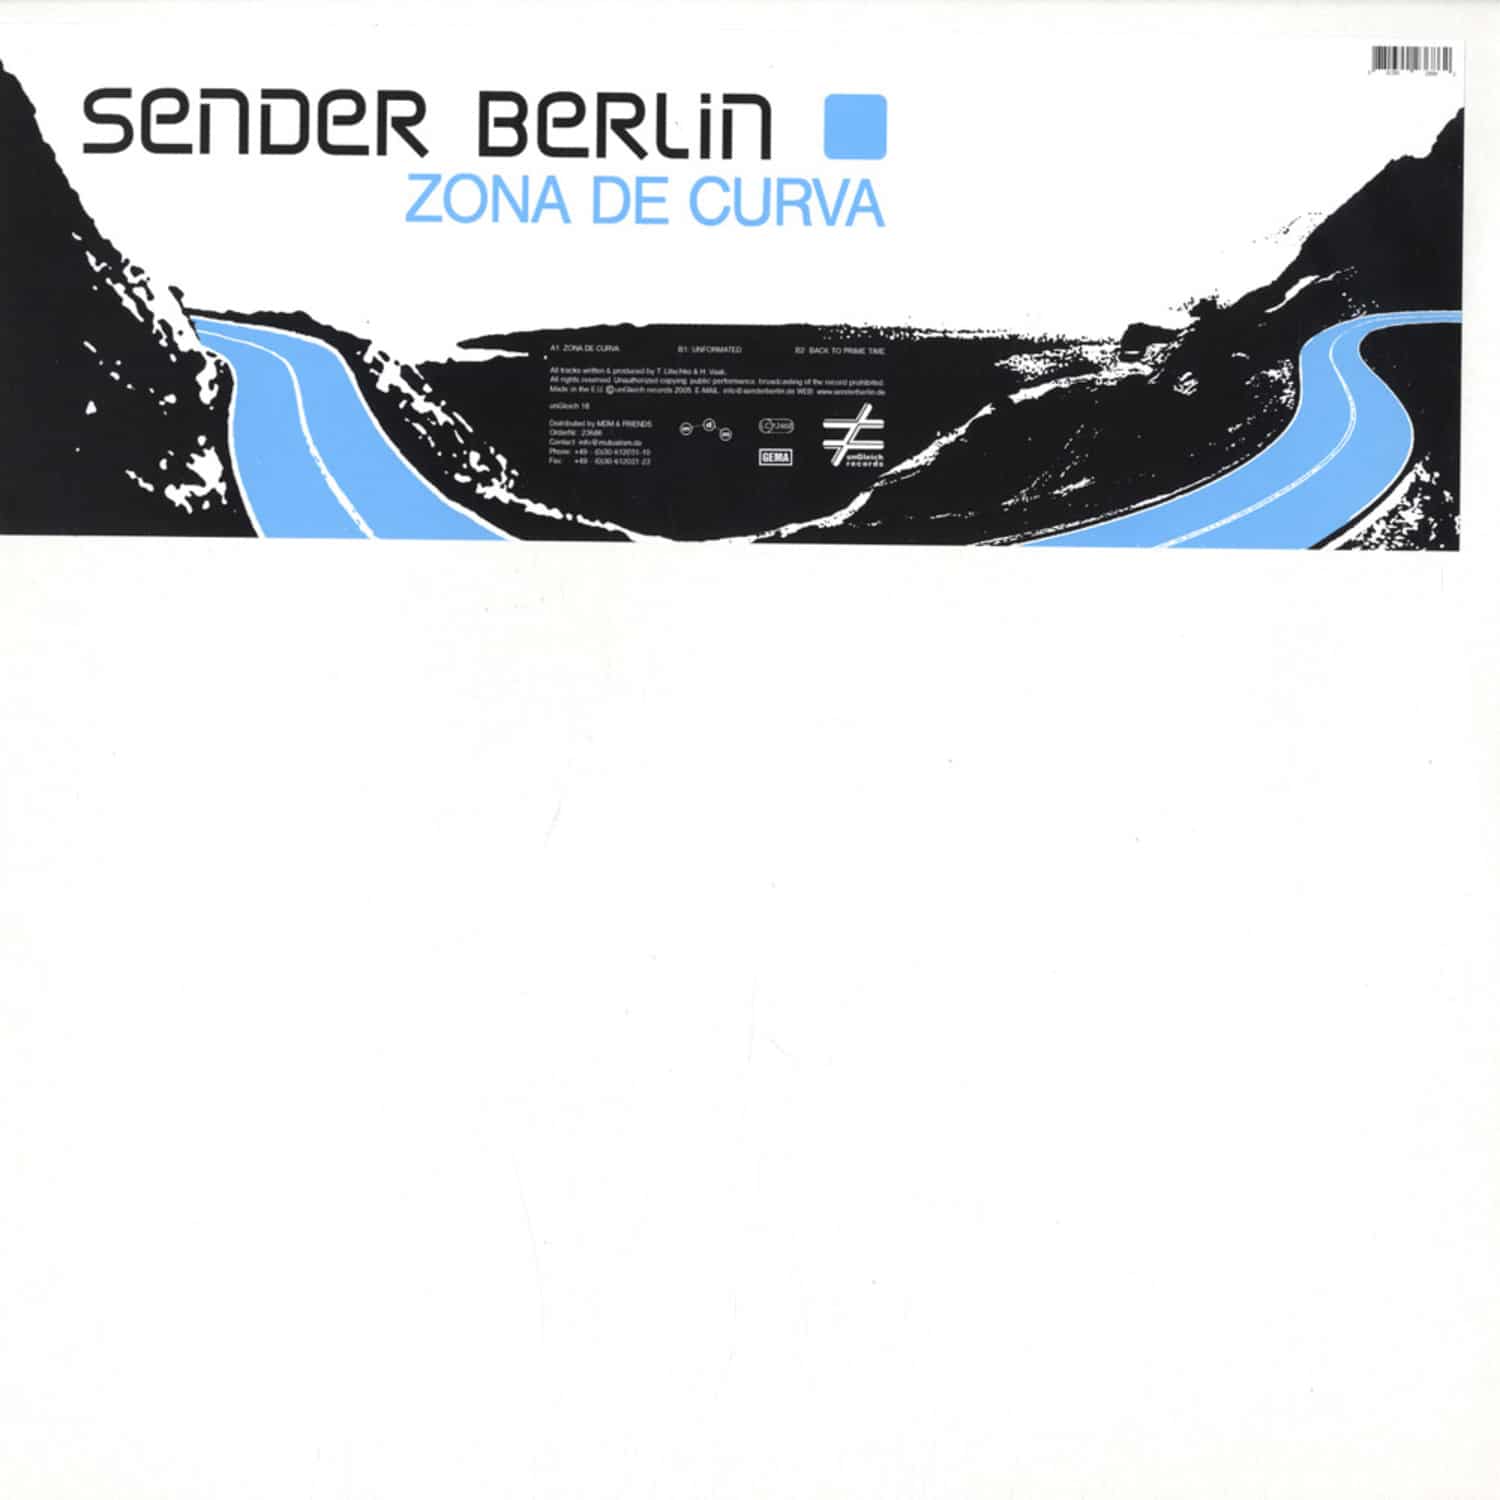 Sender Berlin - ZONA DE CURVA